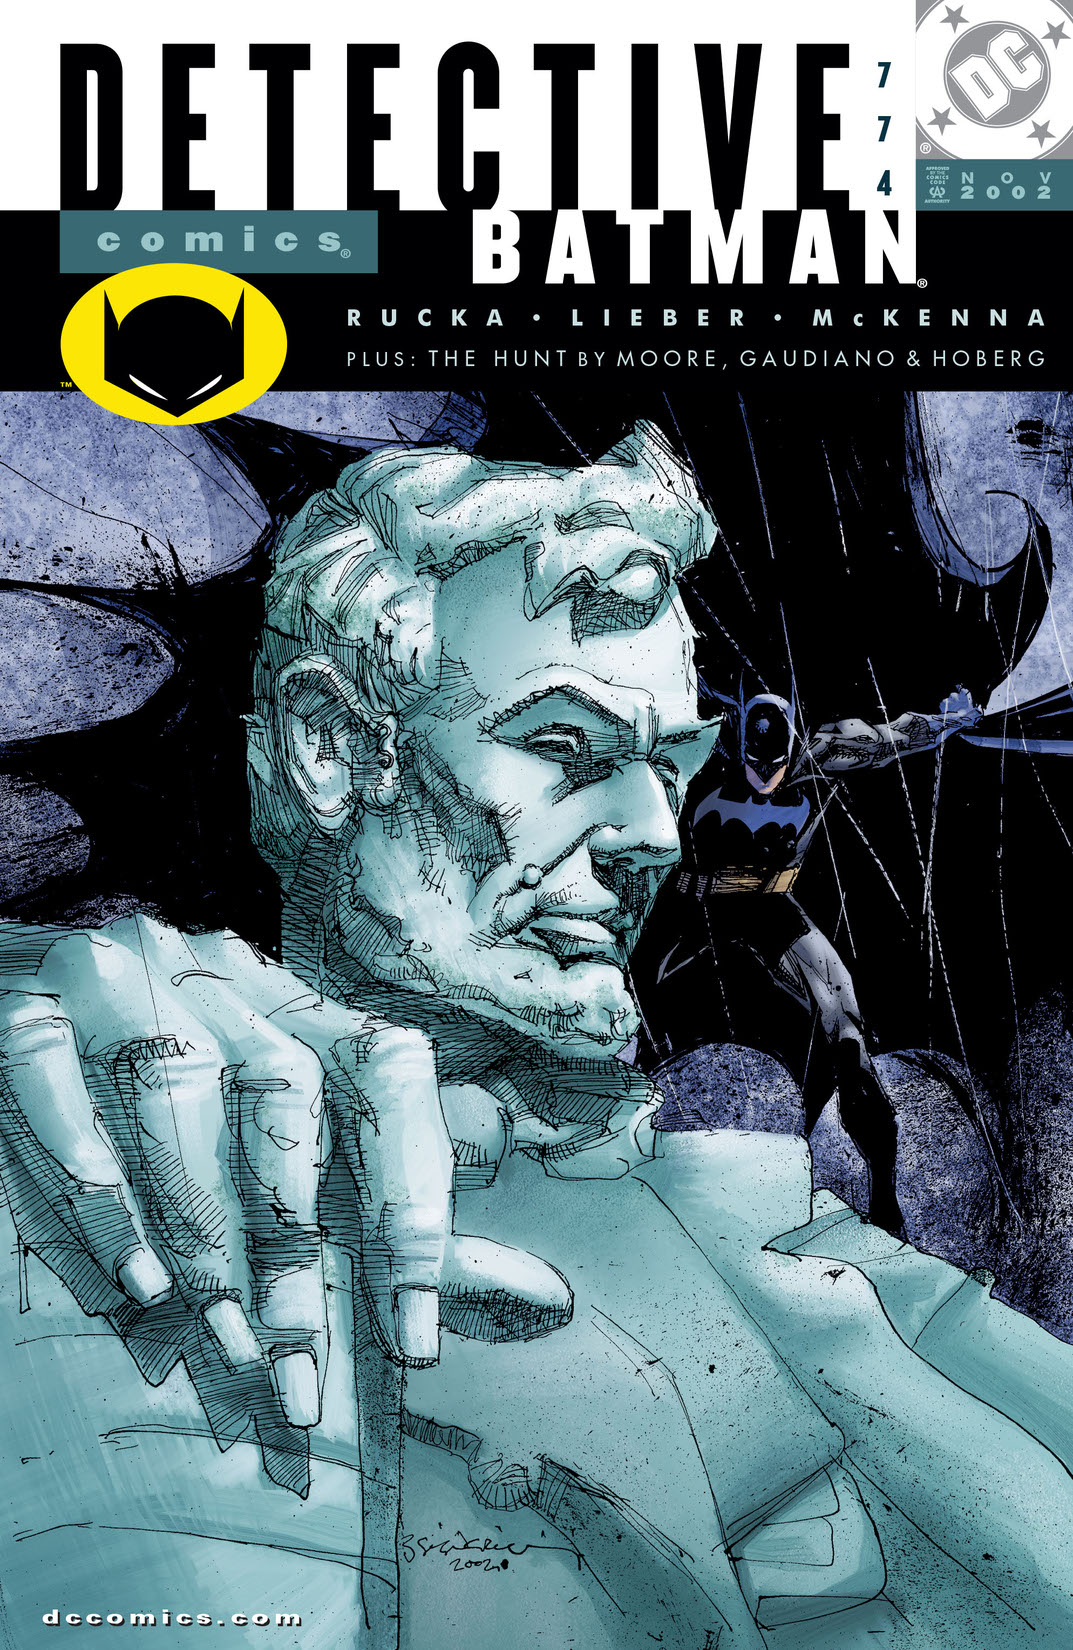 Detective Comics (1937-) #774 preview images